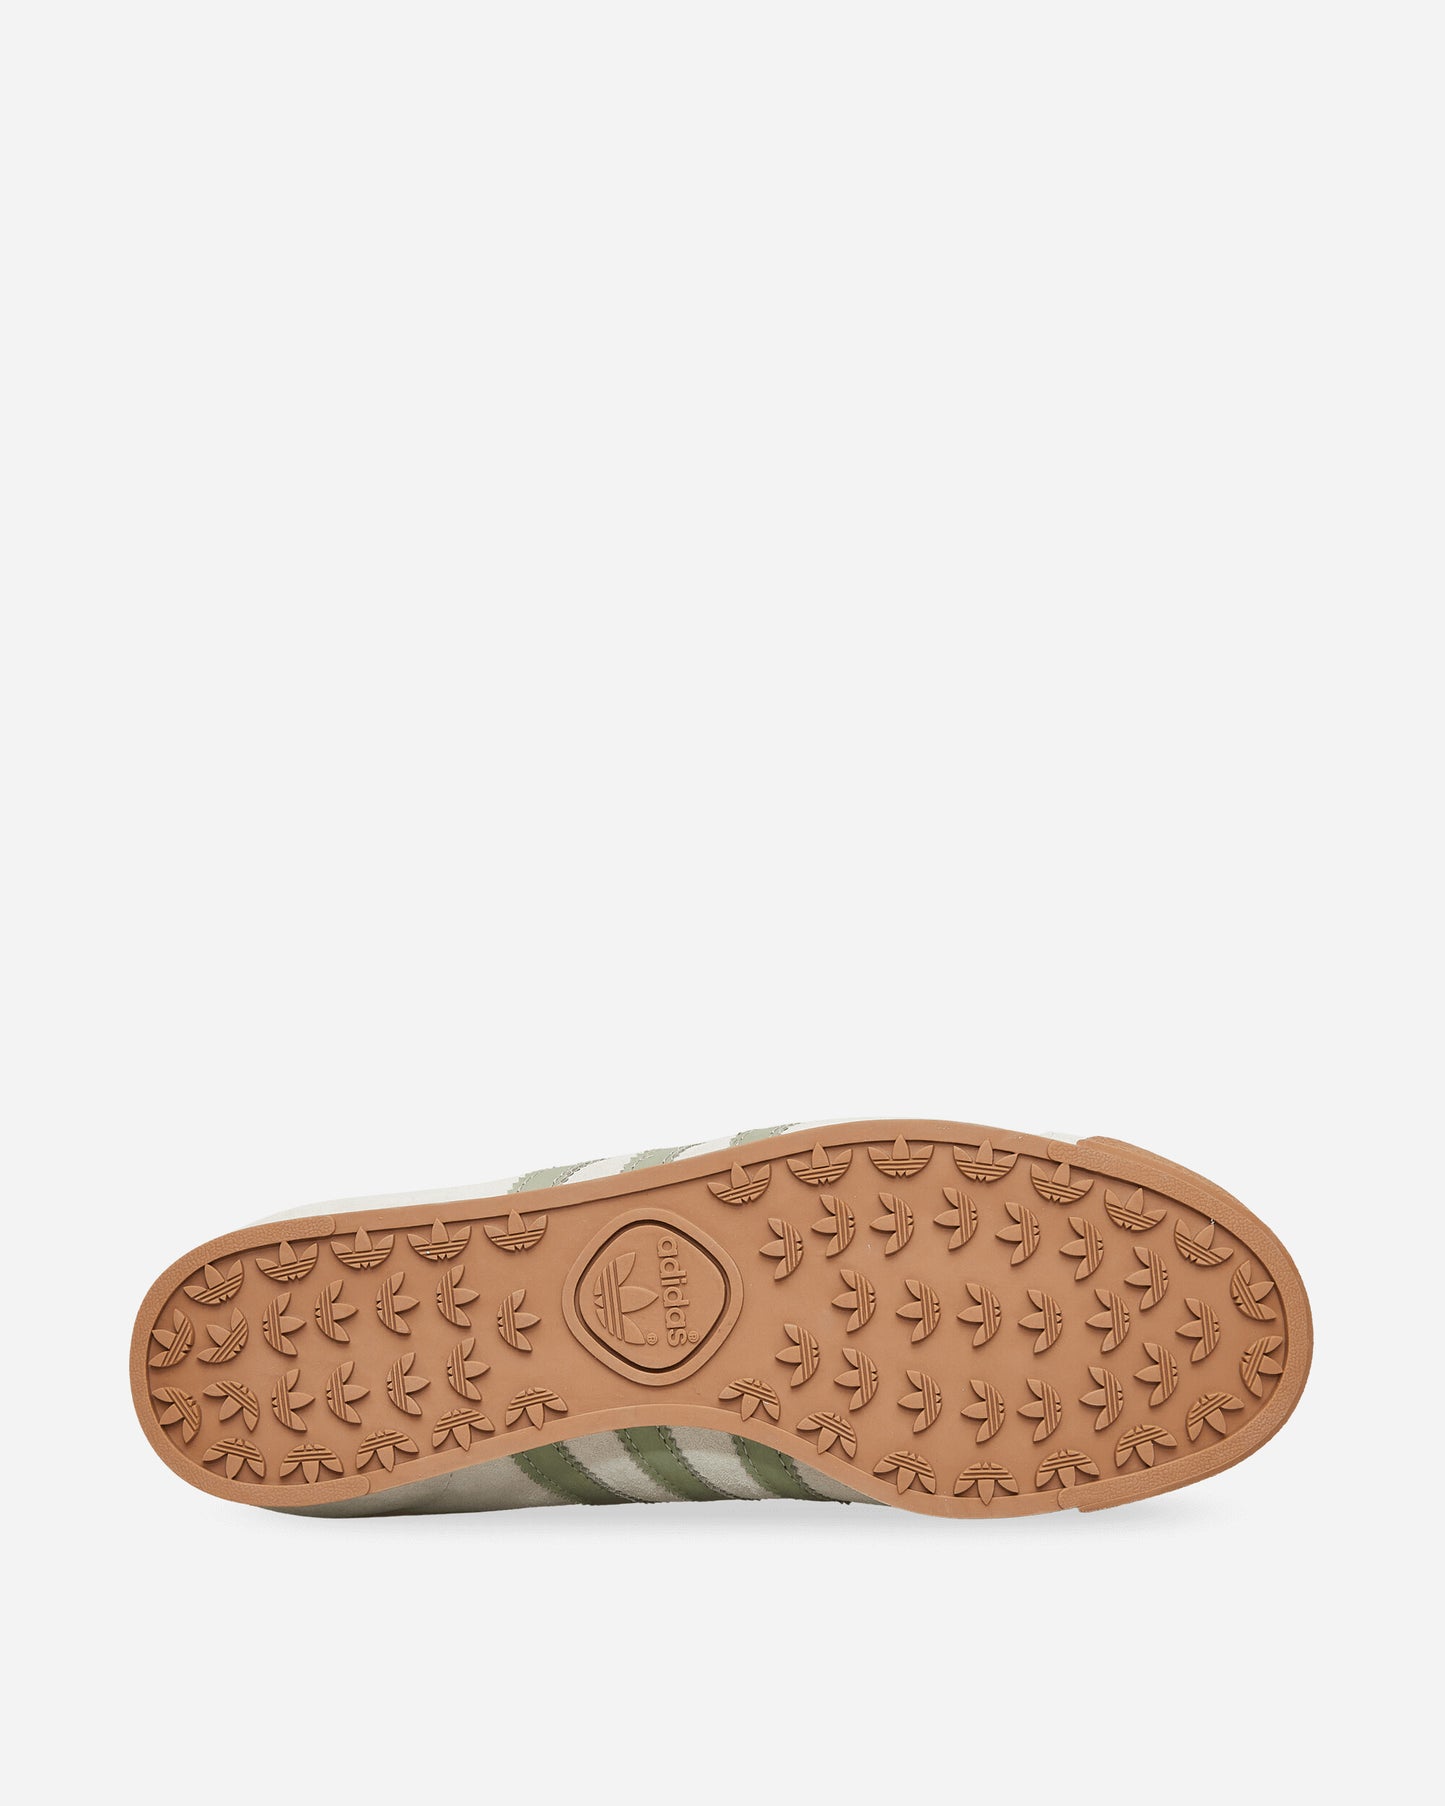 adidas Samoa Maha Chalk White/Halo Green Sneakers Low IE0968 001